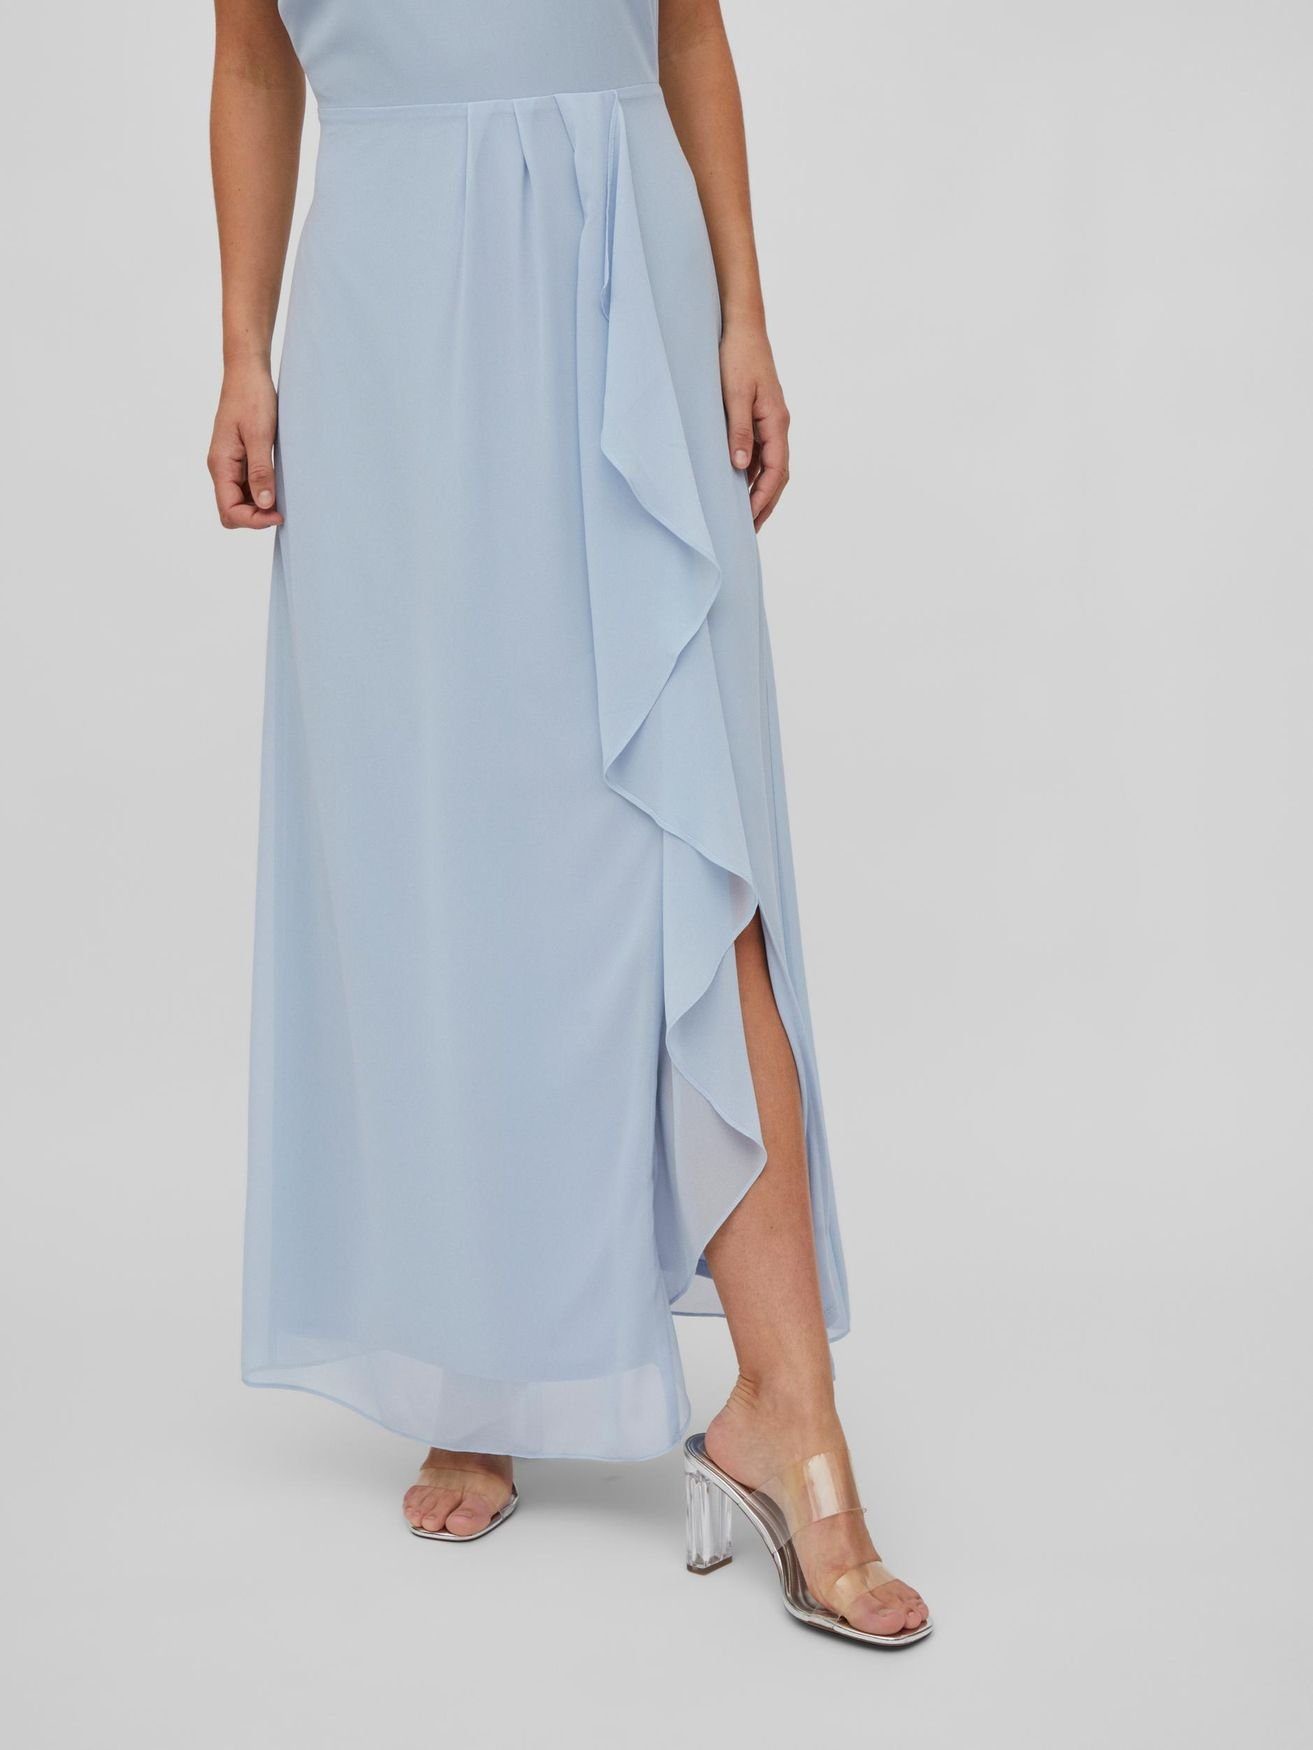 Vila Shirtkleid Maxi 5478 Hochzeitsgast Kentucky Abschluss in (lang) Blue VIMILINA Dress Blau Kleid